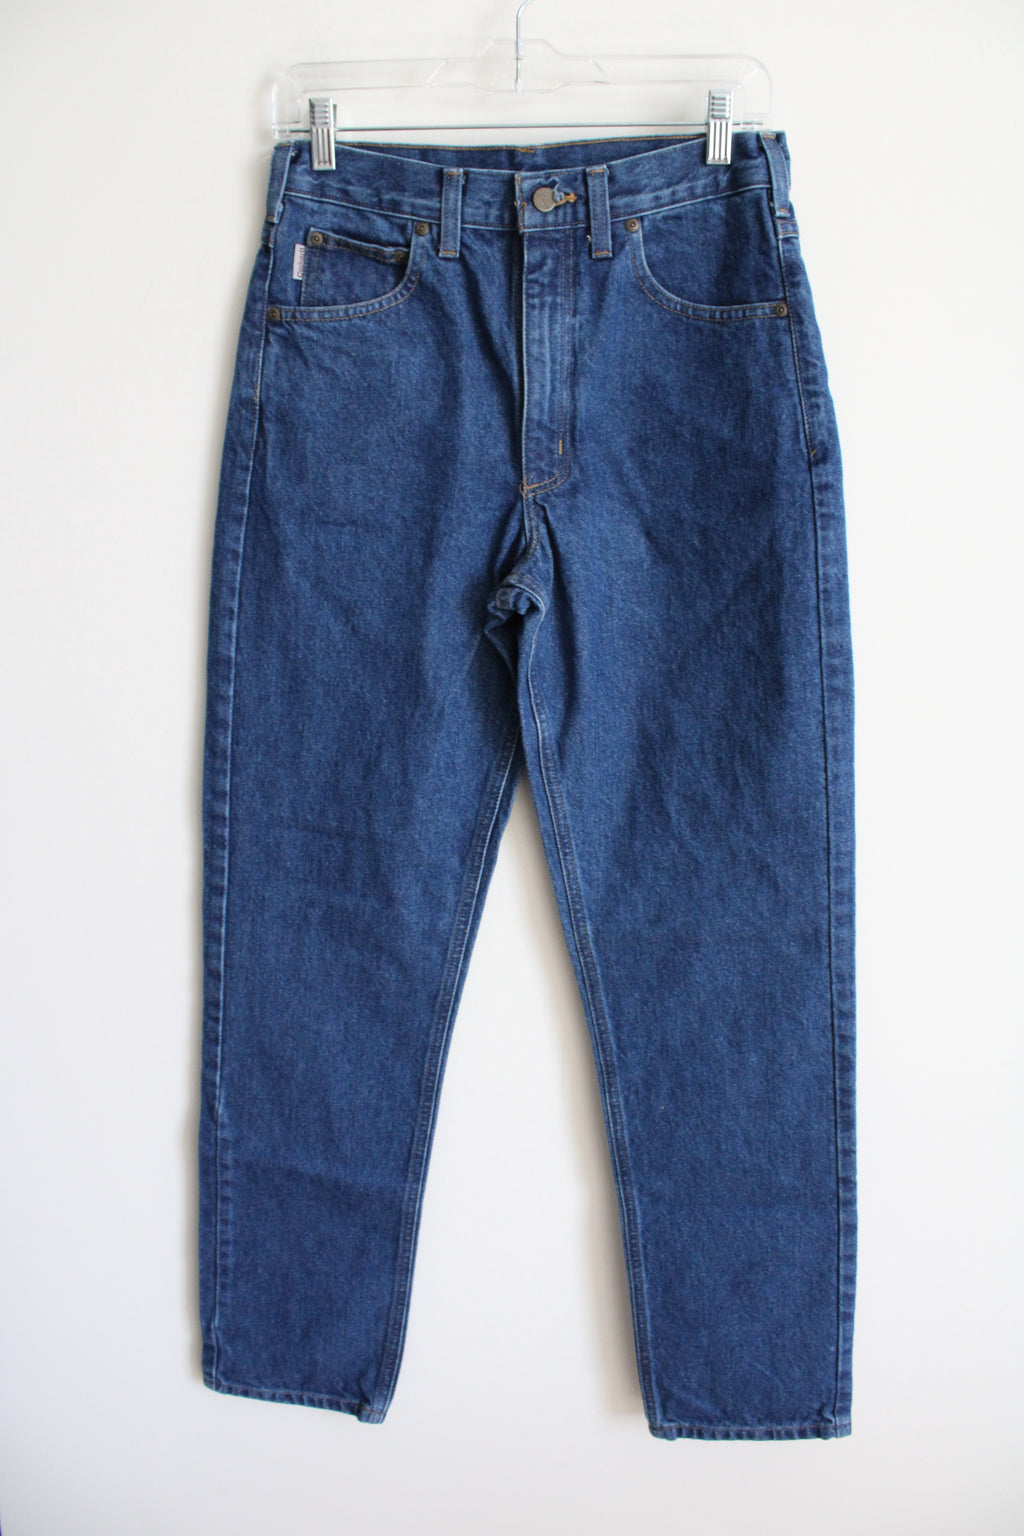 Carhartt Blue Jeans | 30X32